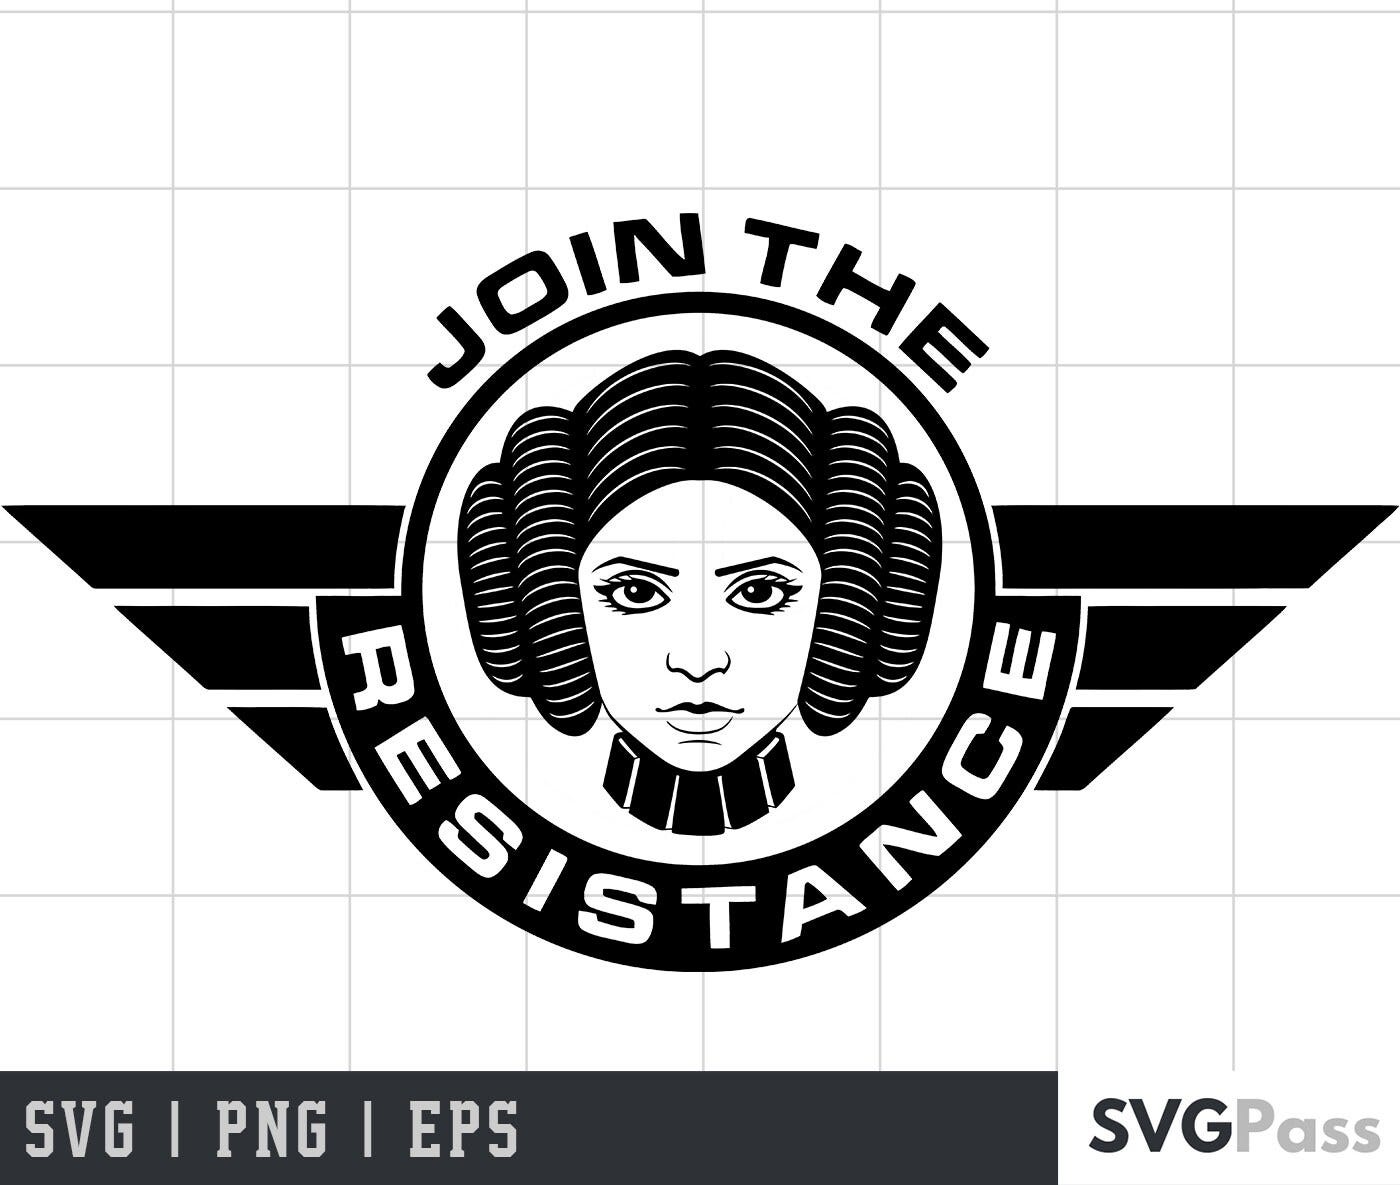 Star Wars Leia Organa Join The Resistance SVG | SVG Cricut Cut File | Silhouette Cut File